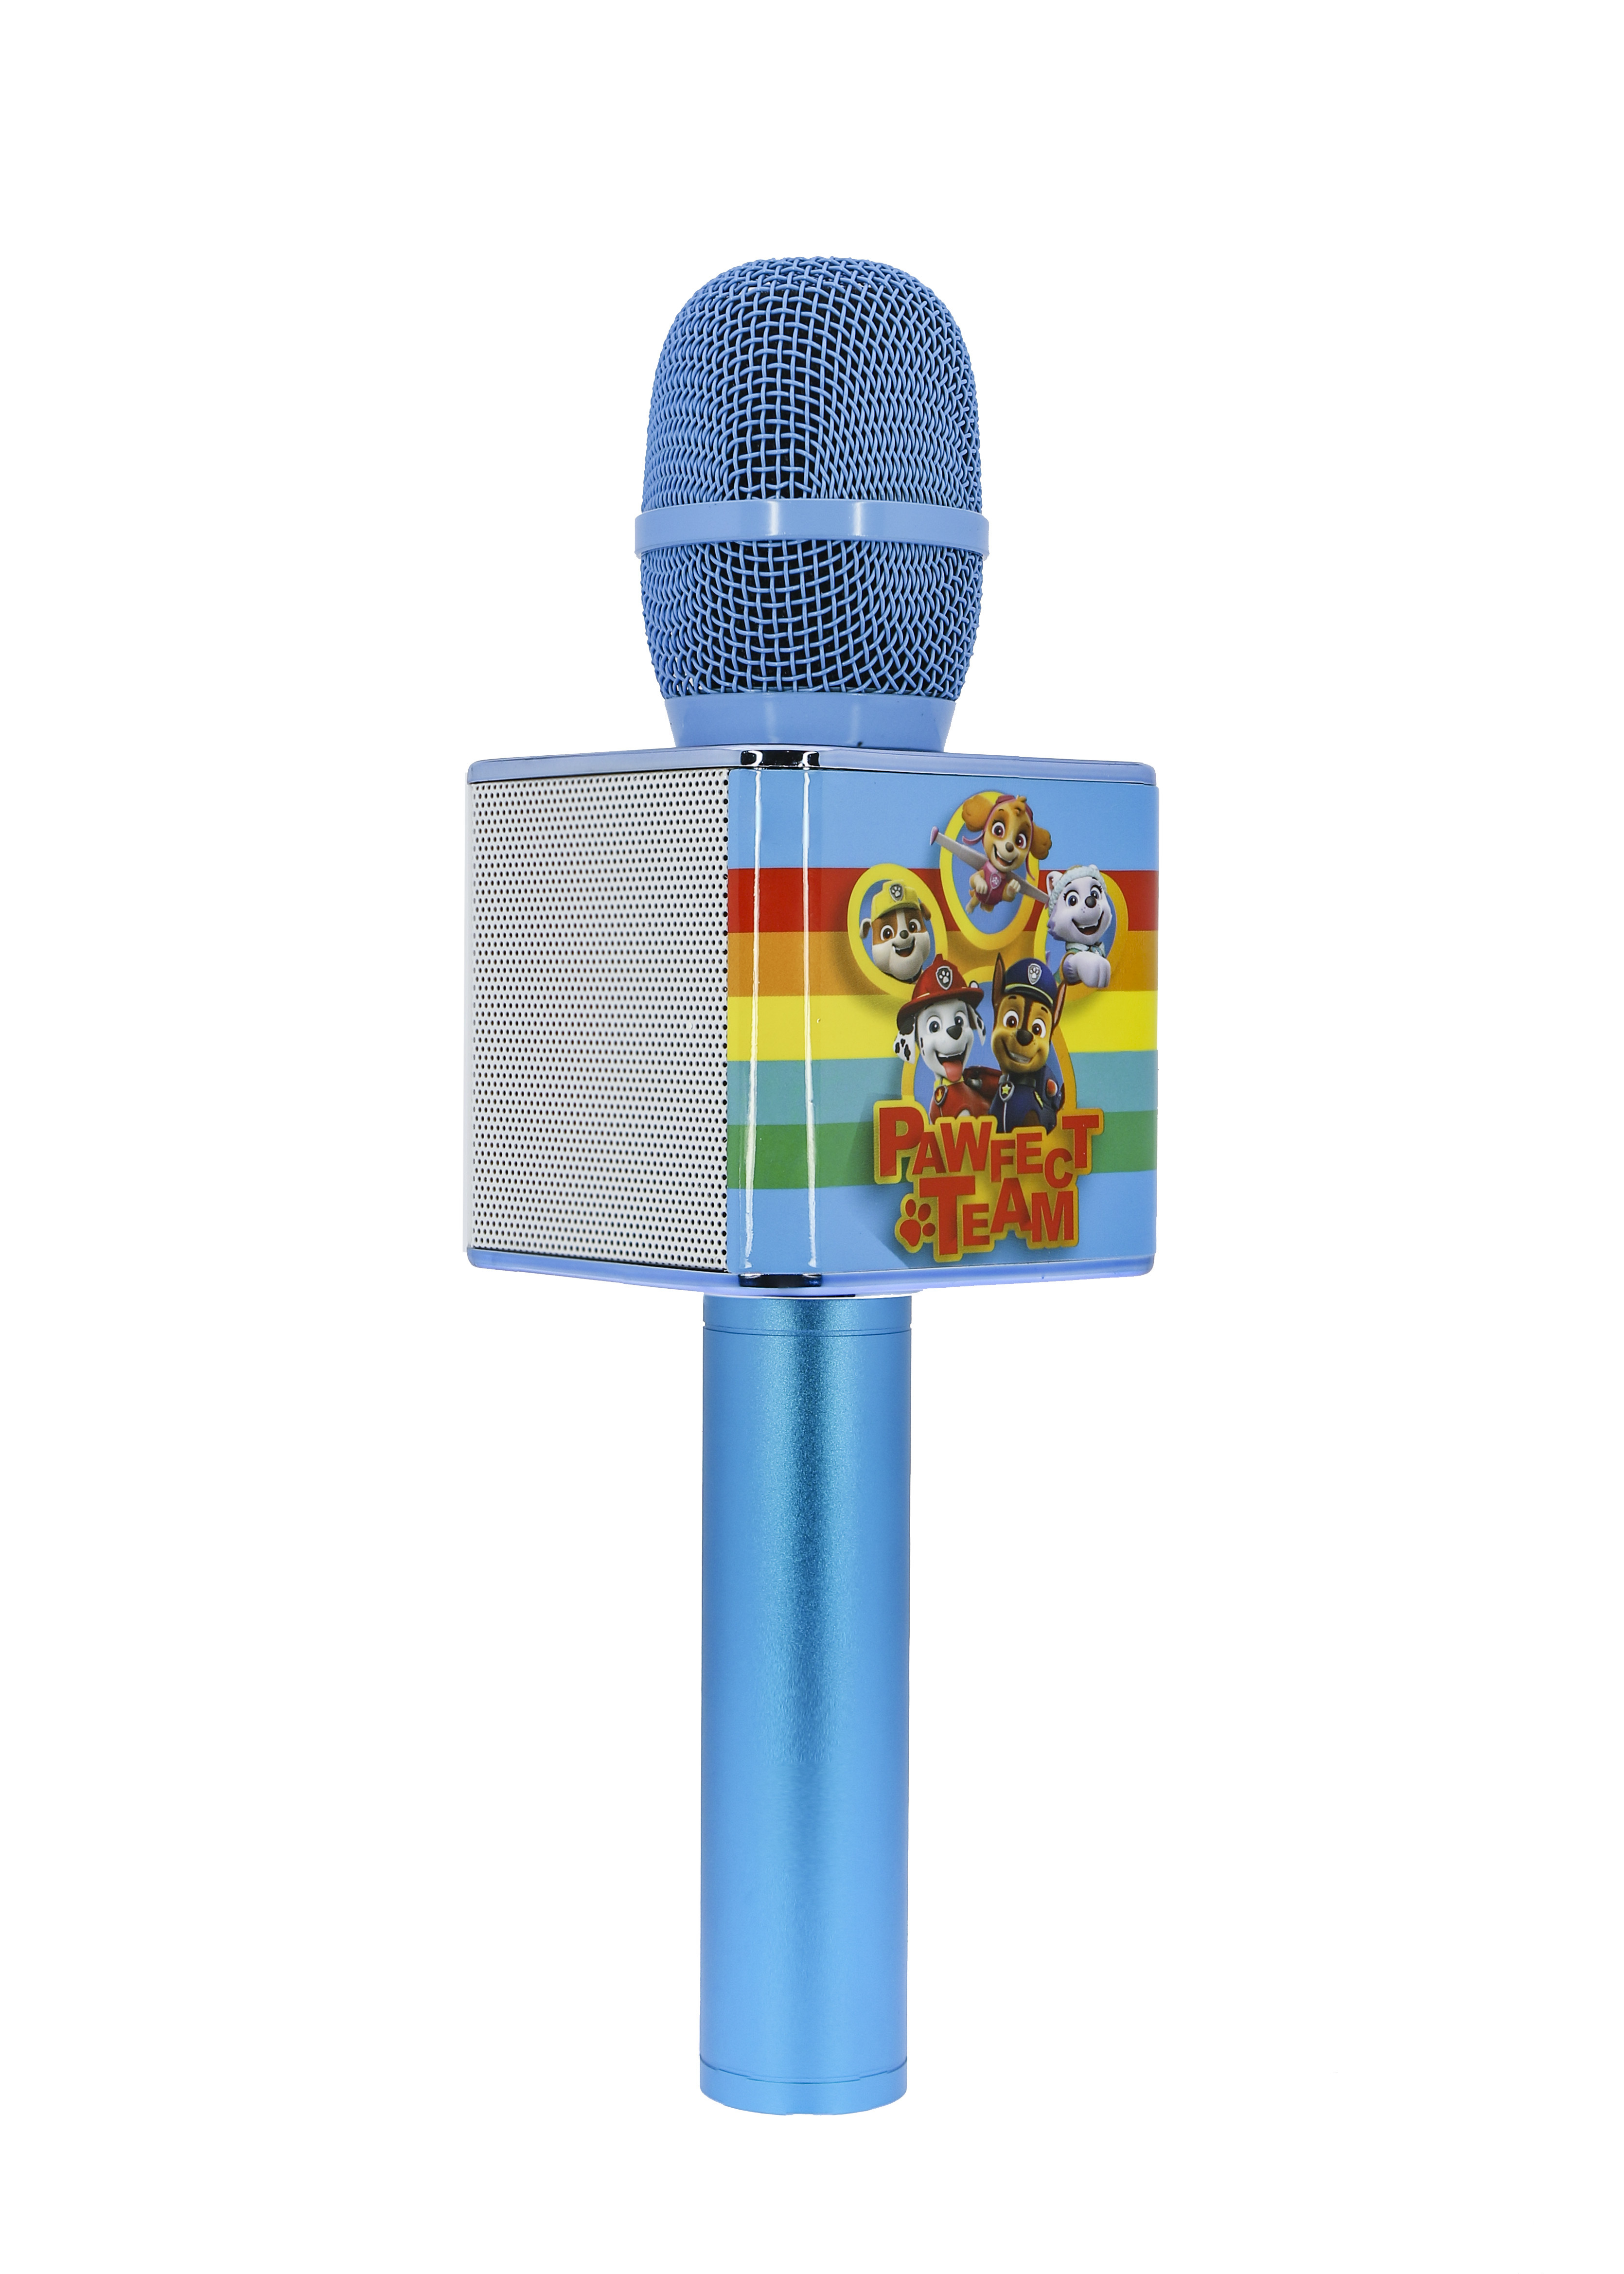 OTL Karaoke-Mikrofon, TECHNOLOGIES blau Patrol Paw